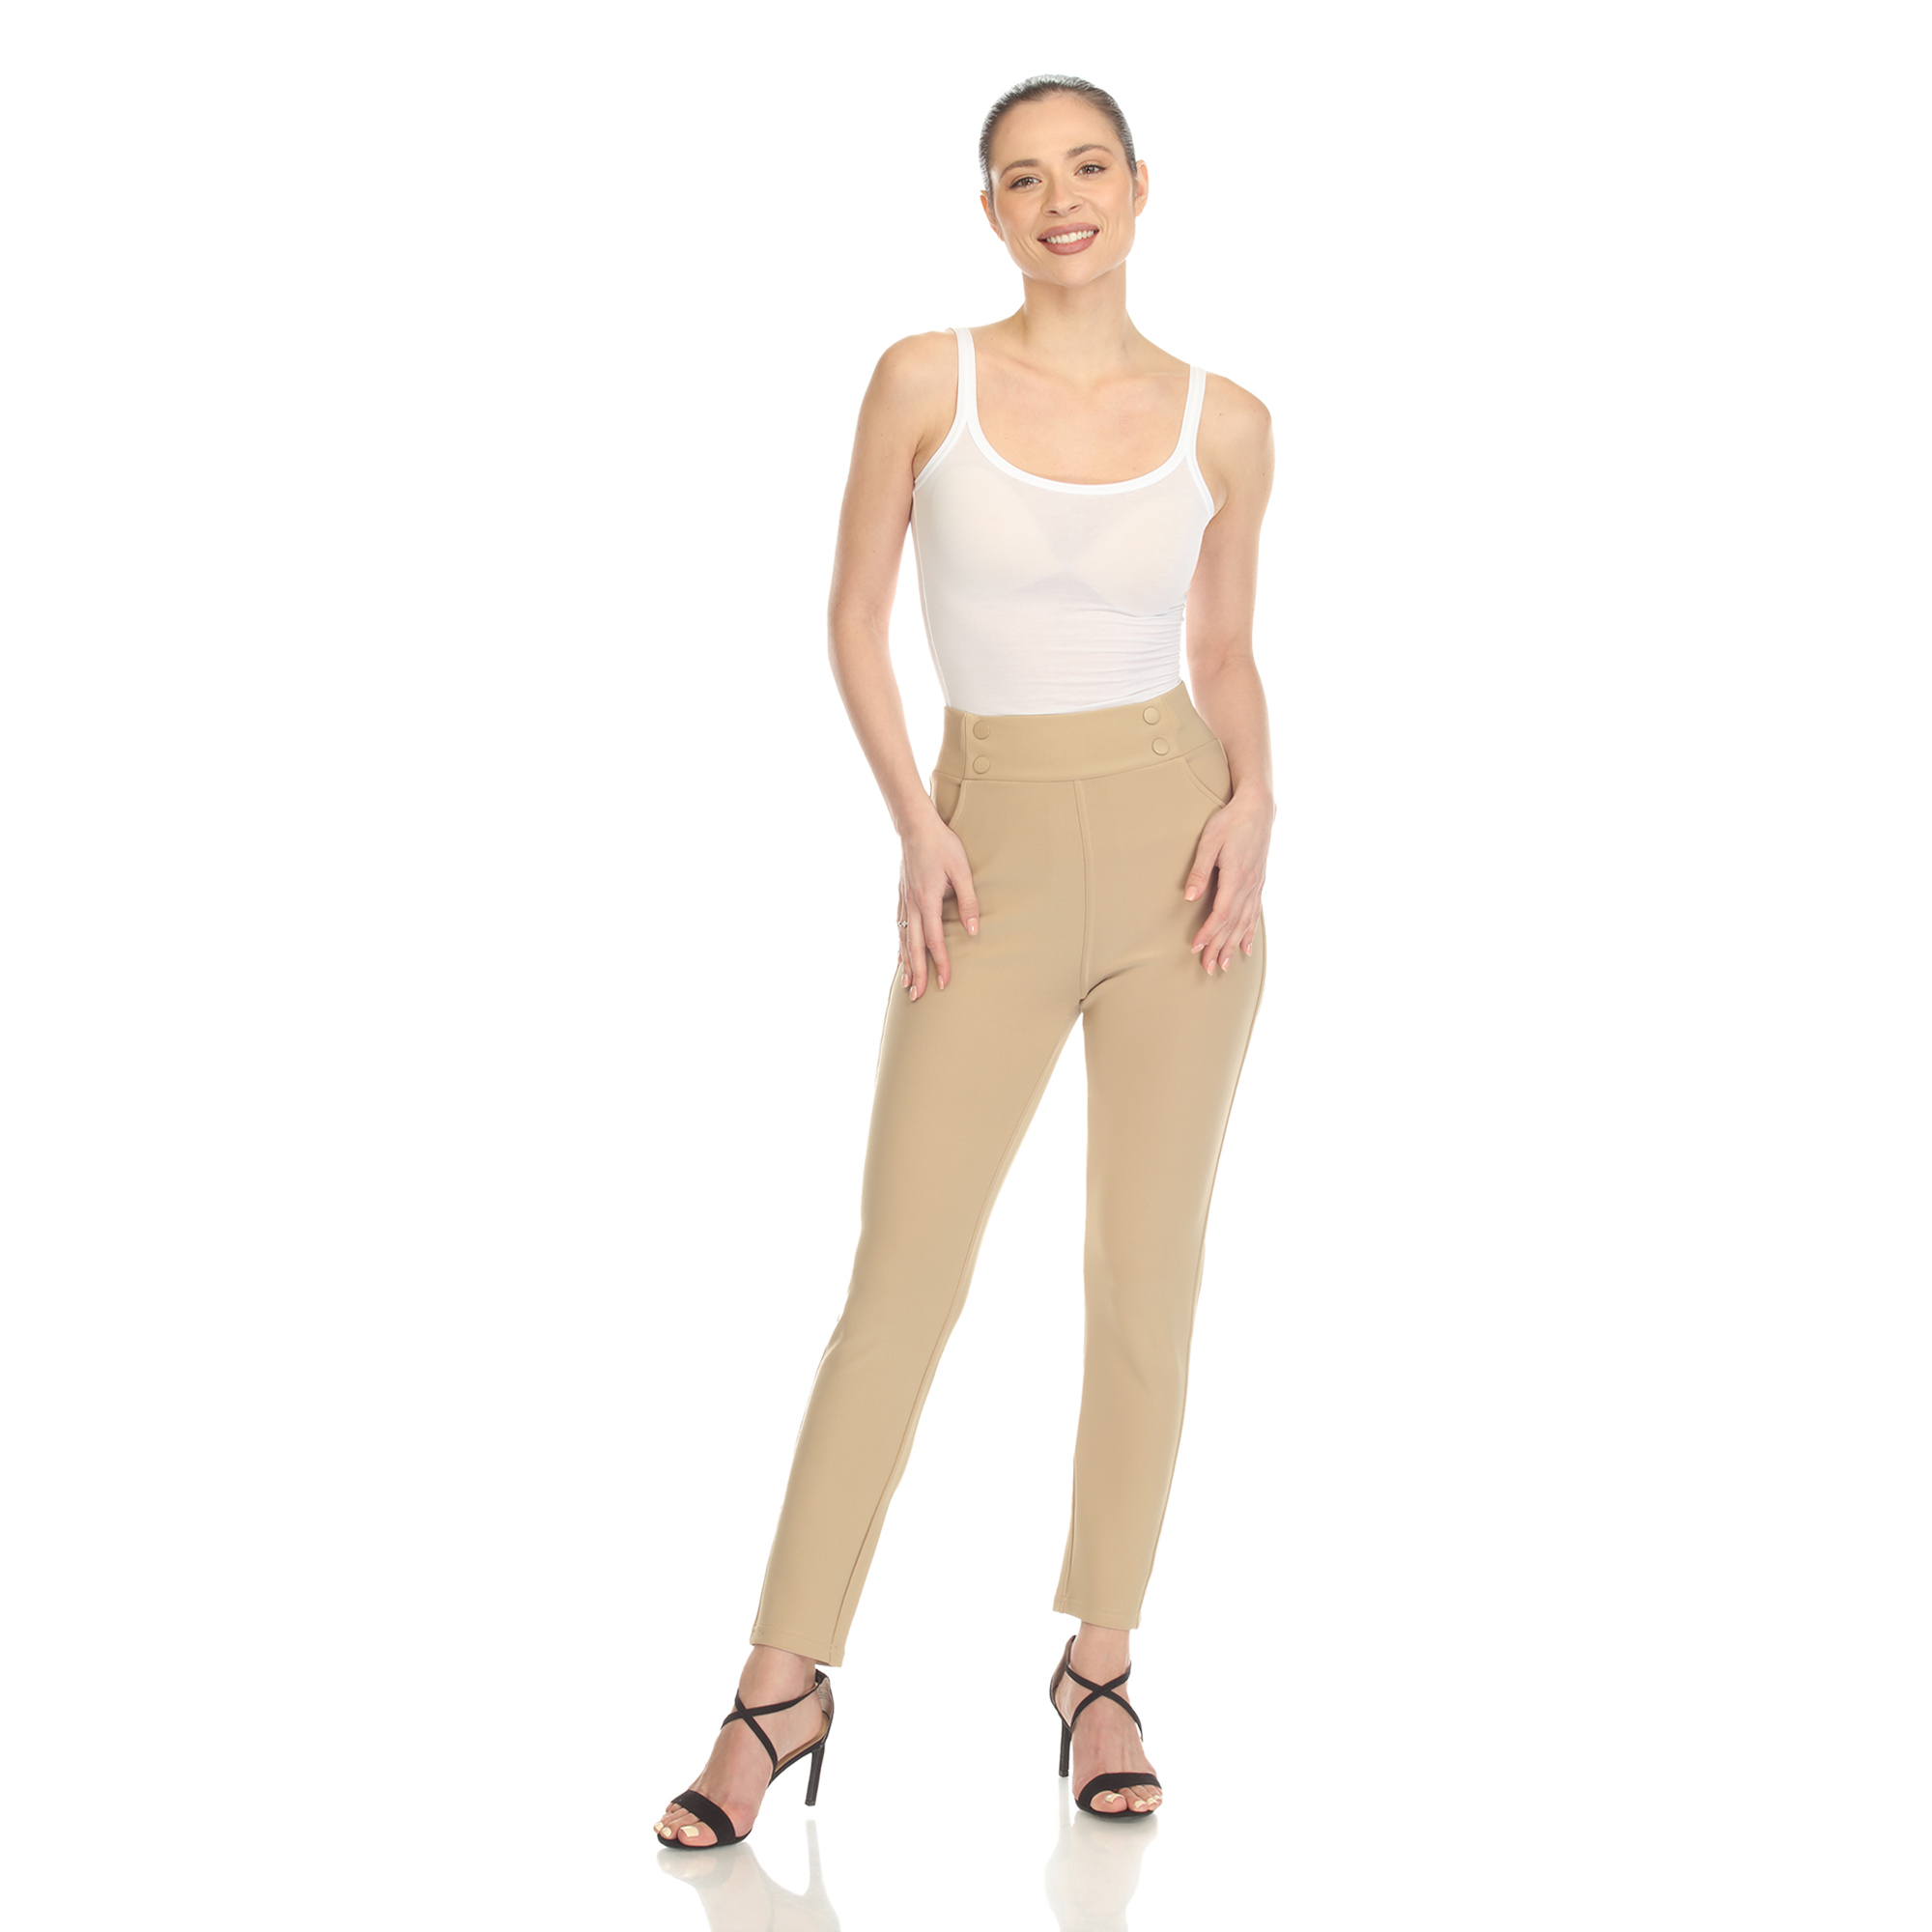 White Mark Women's Super Soft Elastic Waistband High Waist Scuba Pants With Pockets - Beige, X-Large